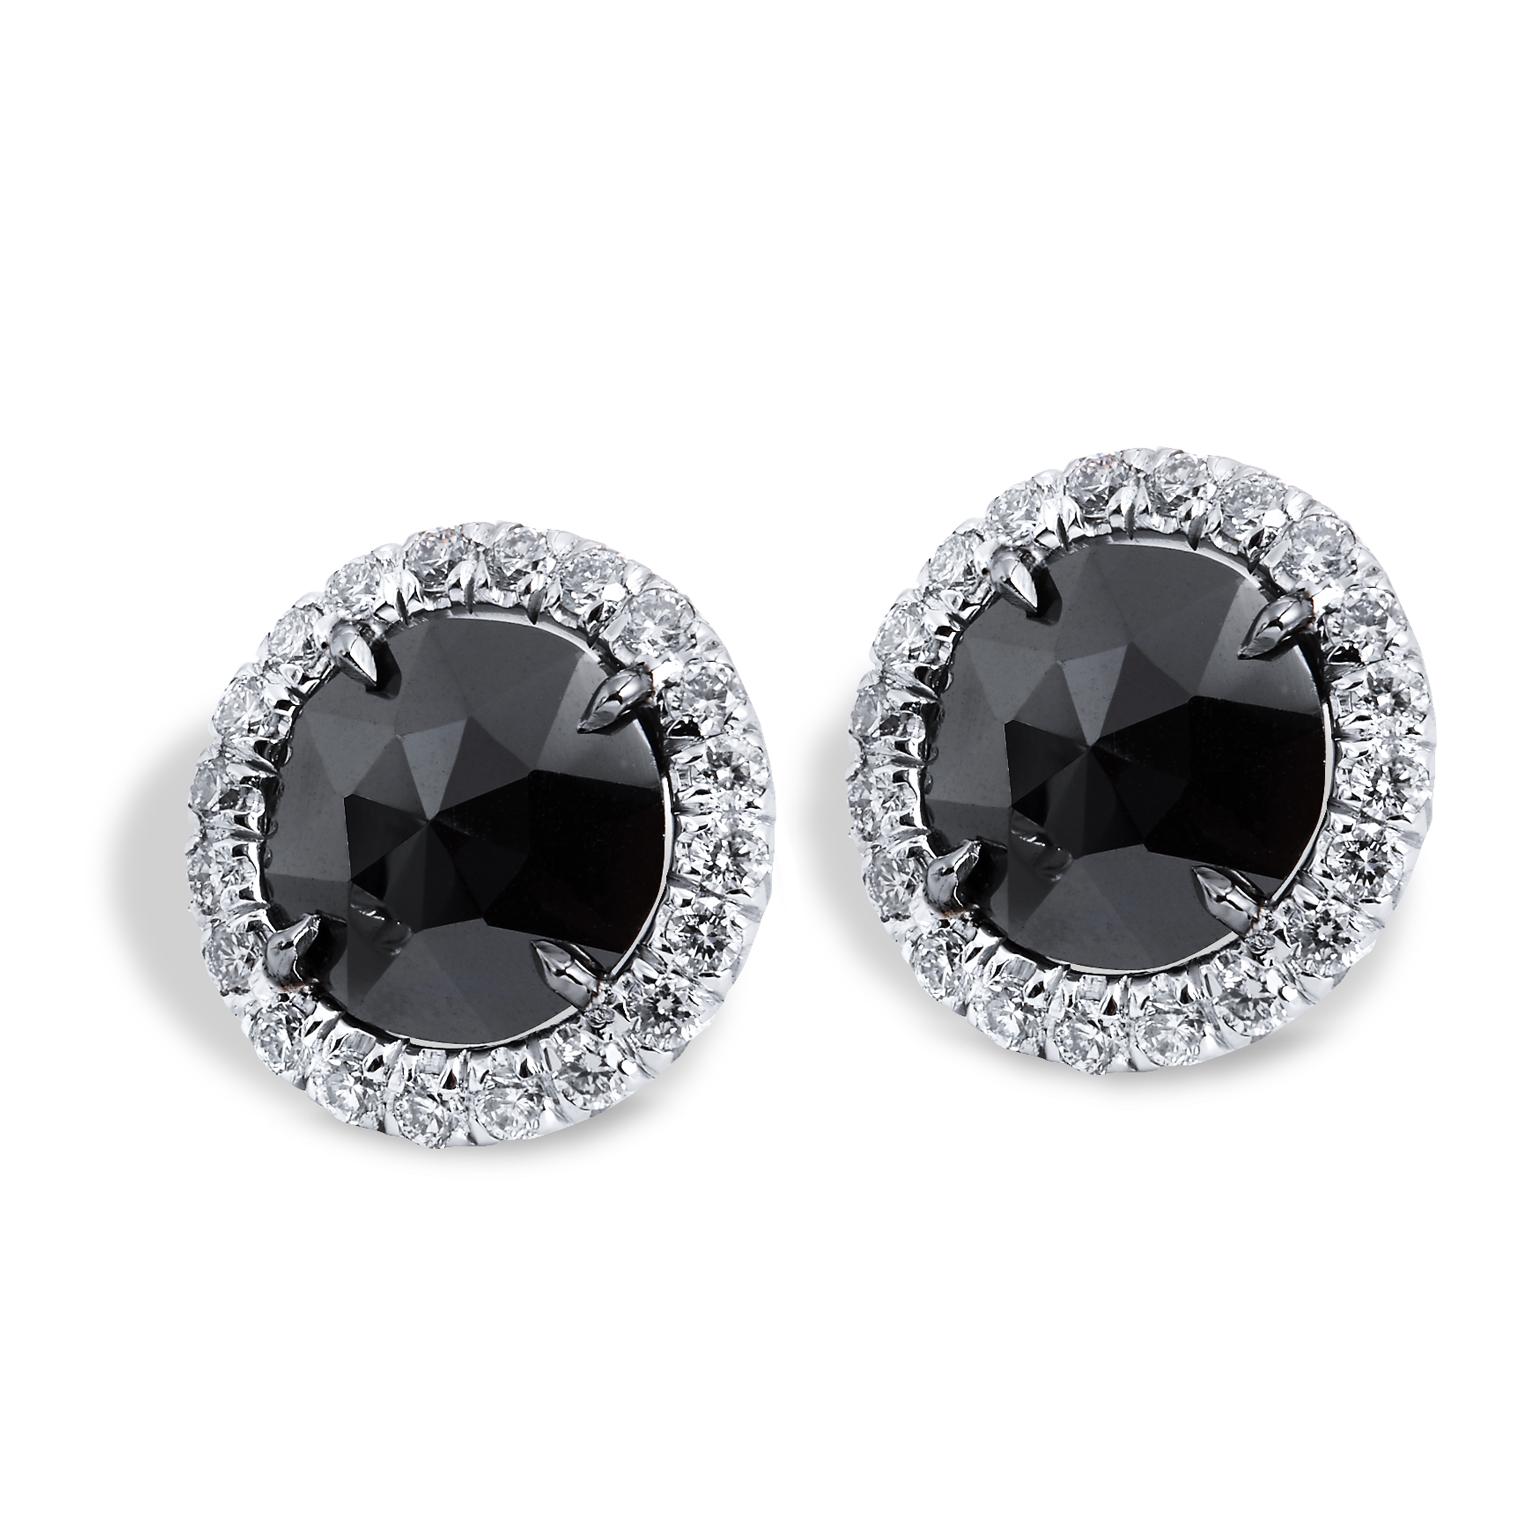 Women's H & H 1.42 Black Diamond Stud Earrings